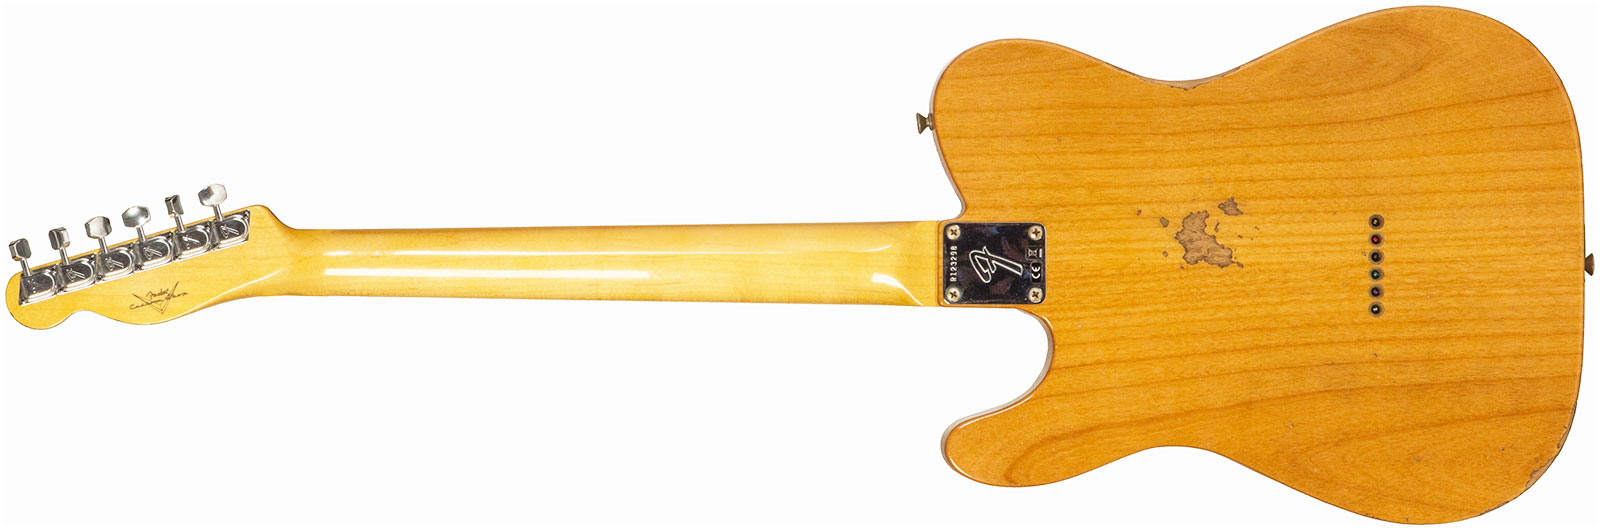 Fender Custom Shop Tele 1968 2s Ht Mn #r123298 - Relic Aged Natural - Televorm elektrische gitaar - Variation 1